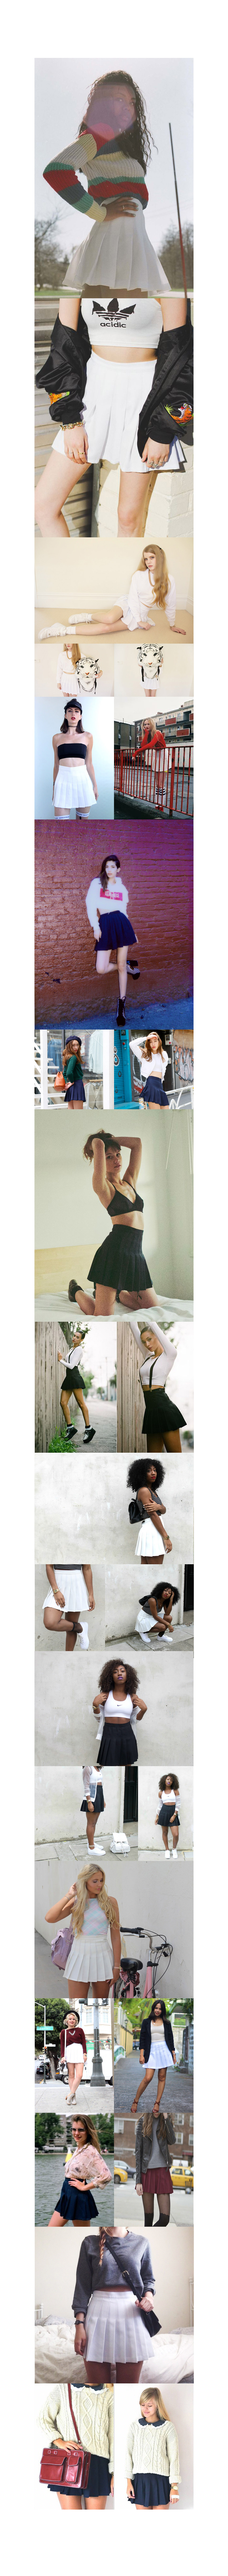 mini skirt model image-S1L16